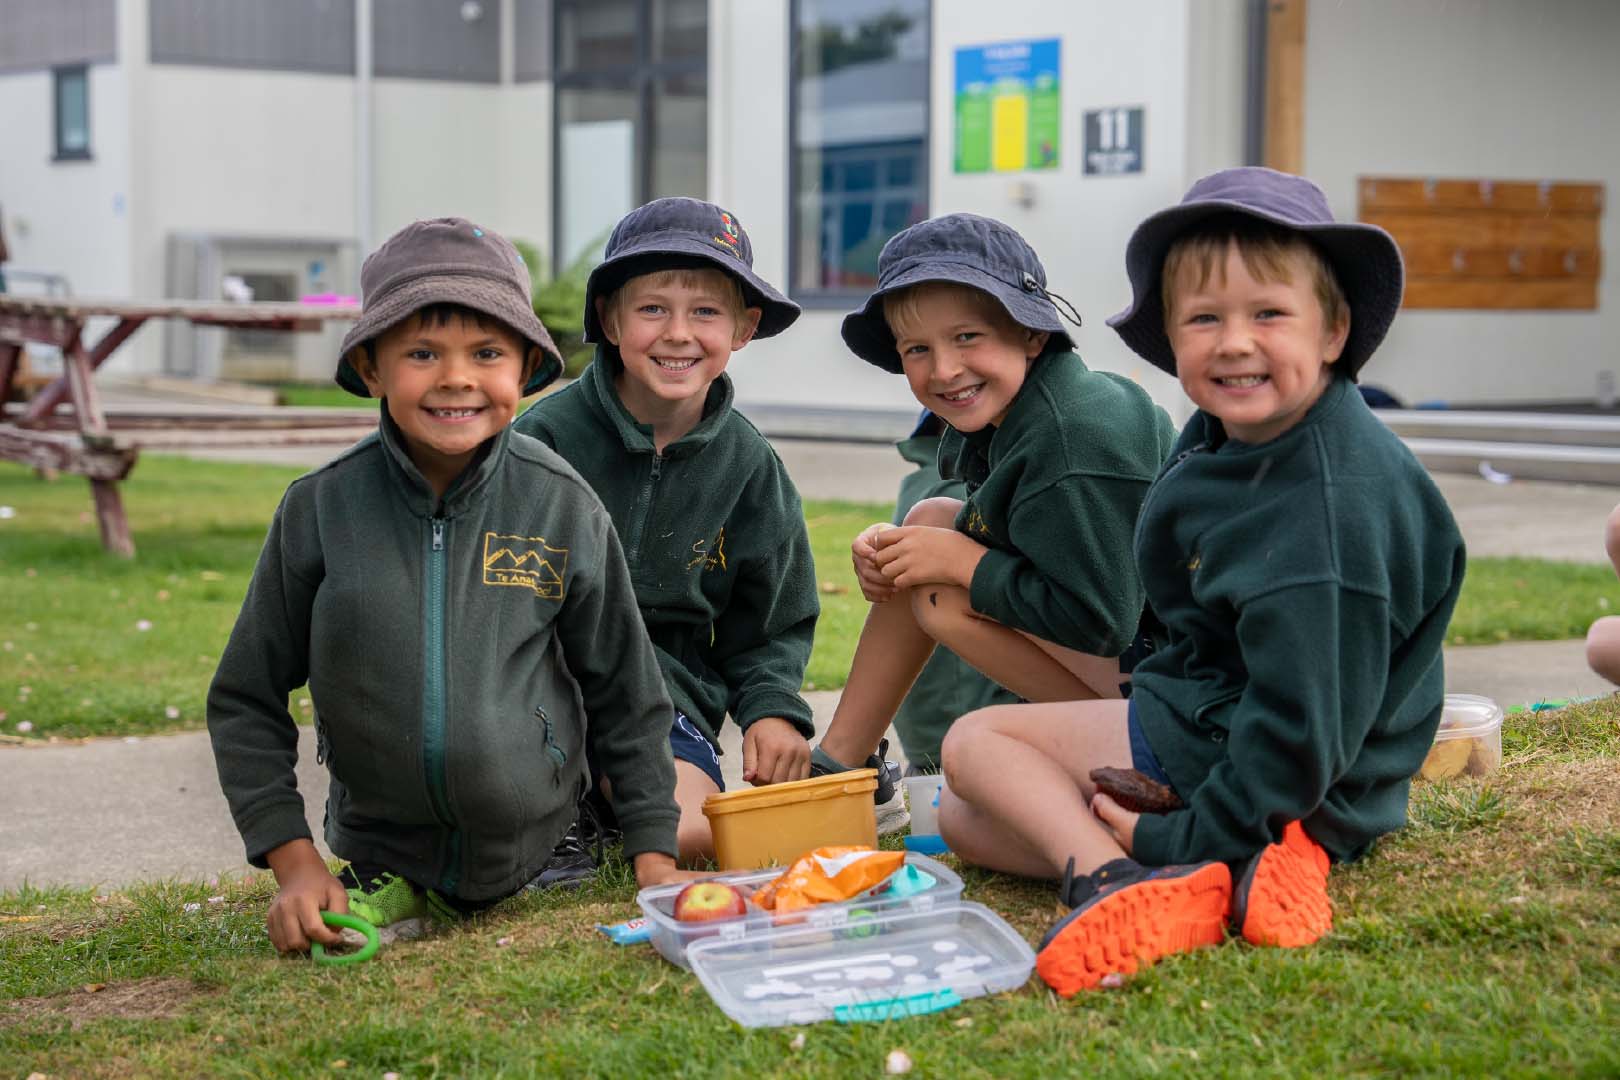 Four Te Anau School children smiling